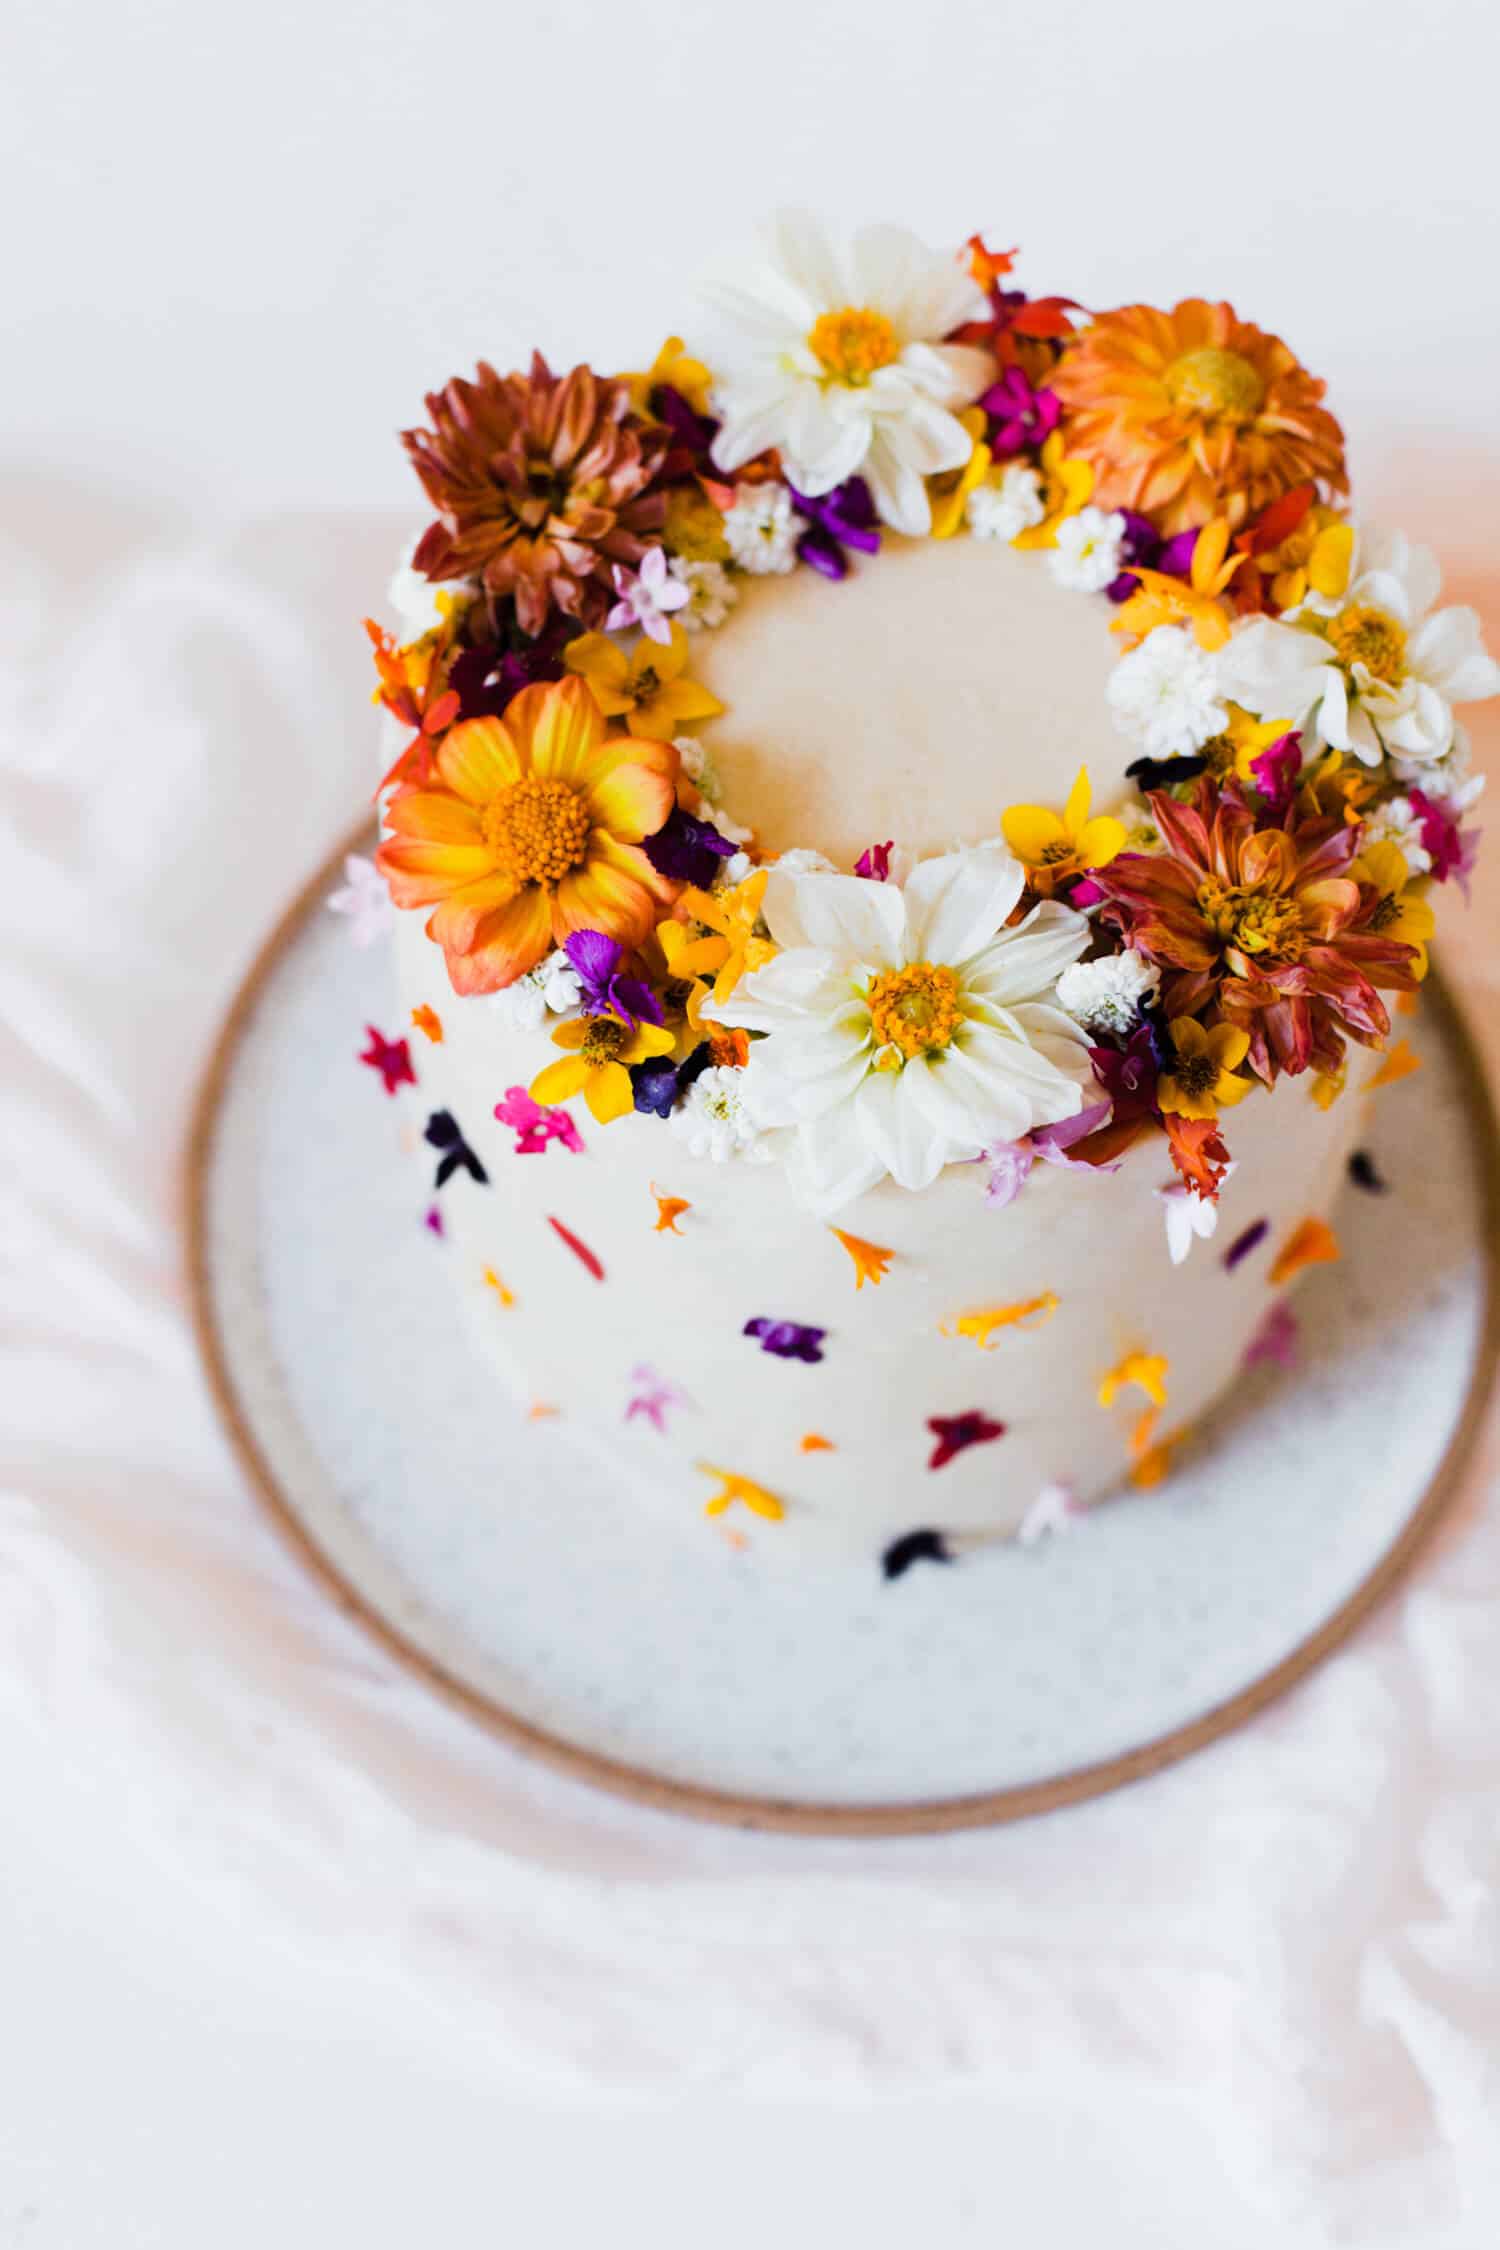 III. Benefits of Using Edible Flowers in Cakes